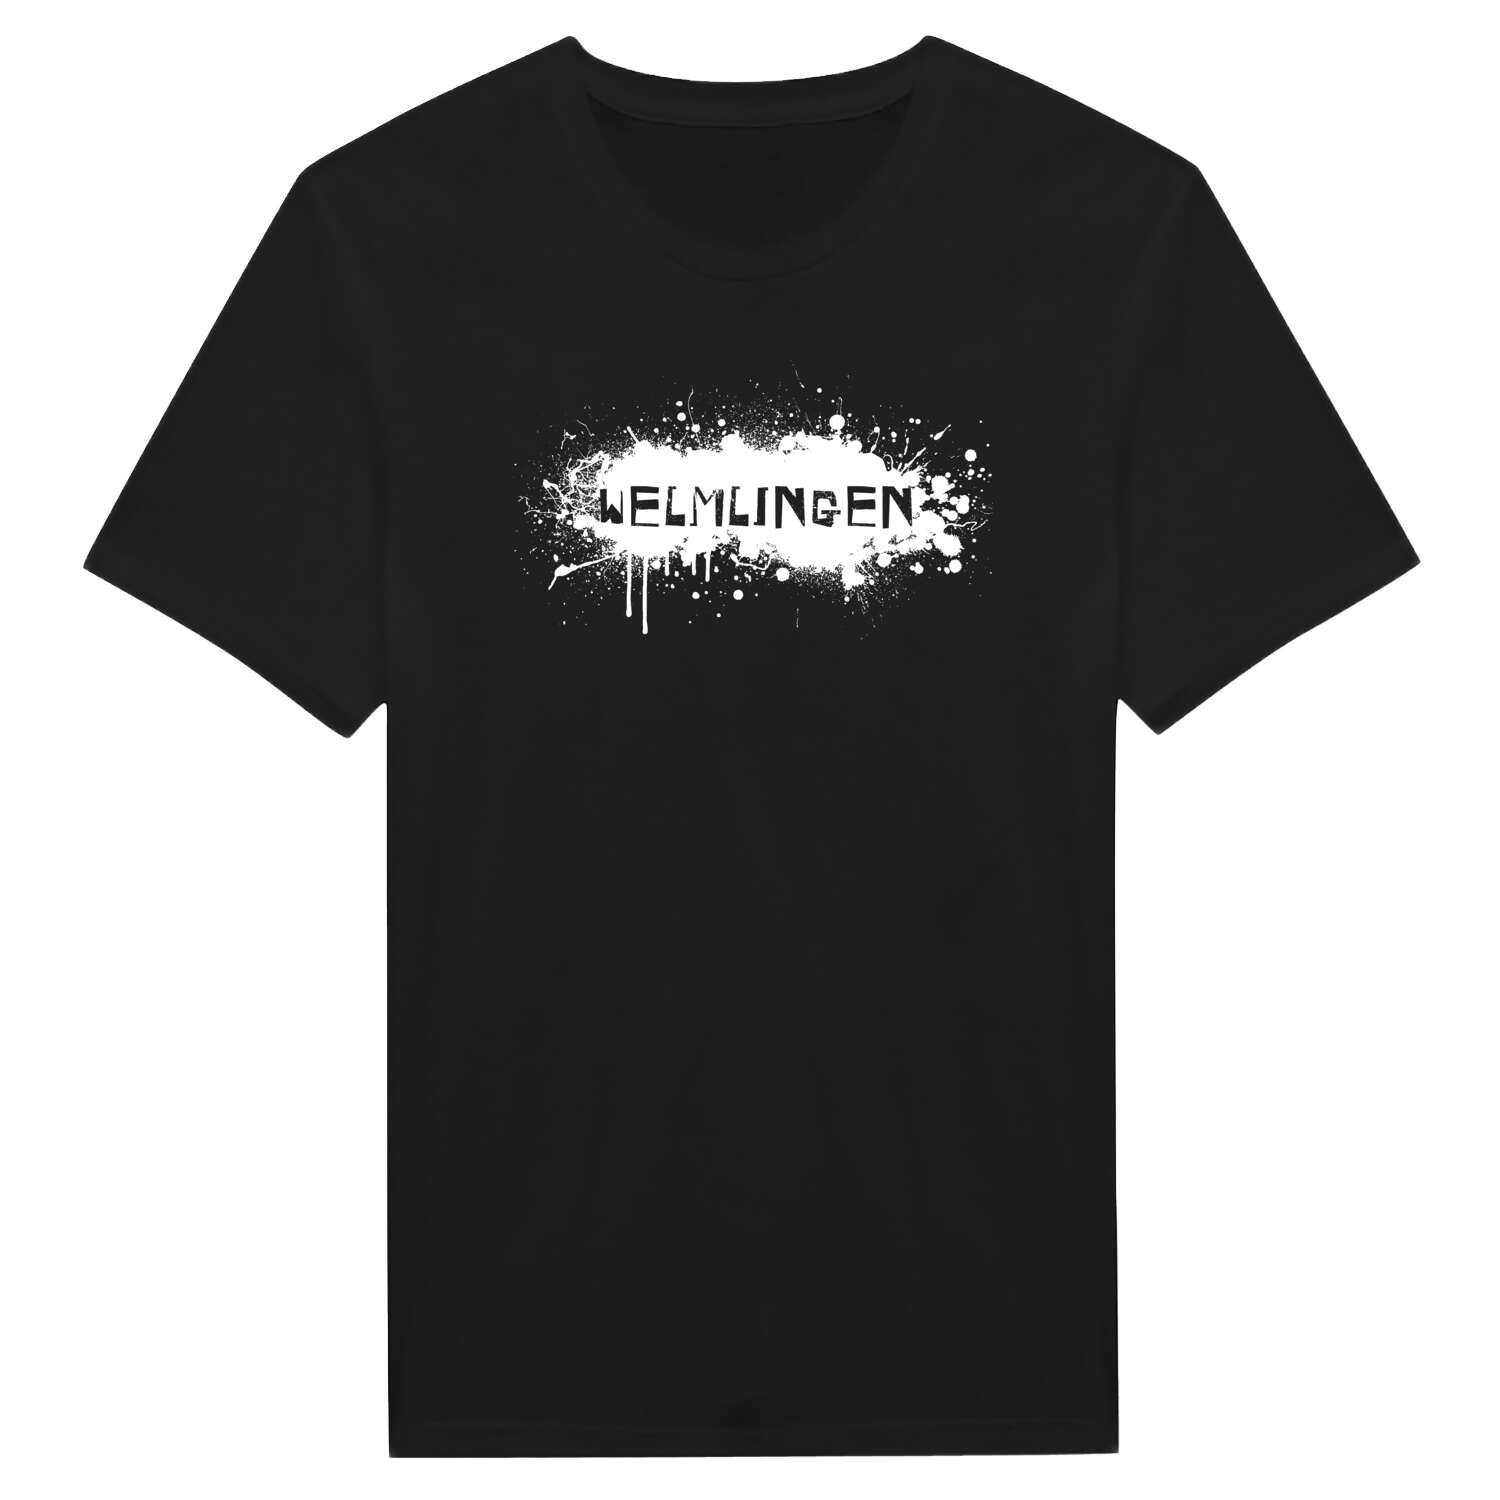 Welmlingen T-Shirt »Paint Splash Punk«